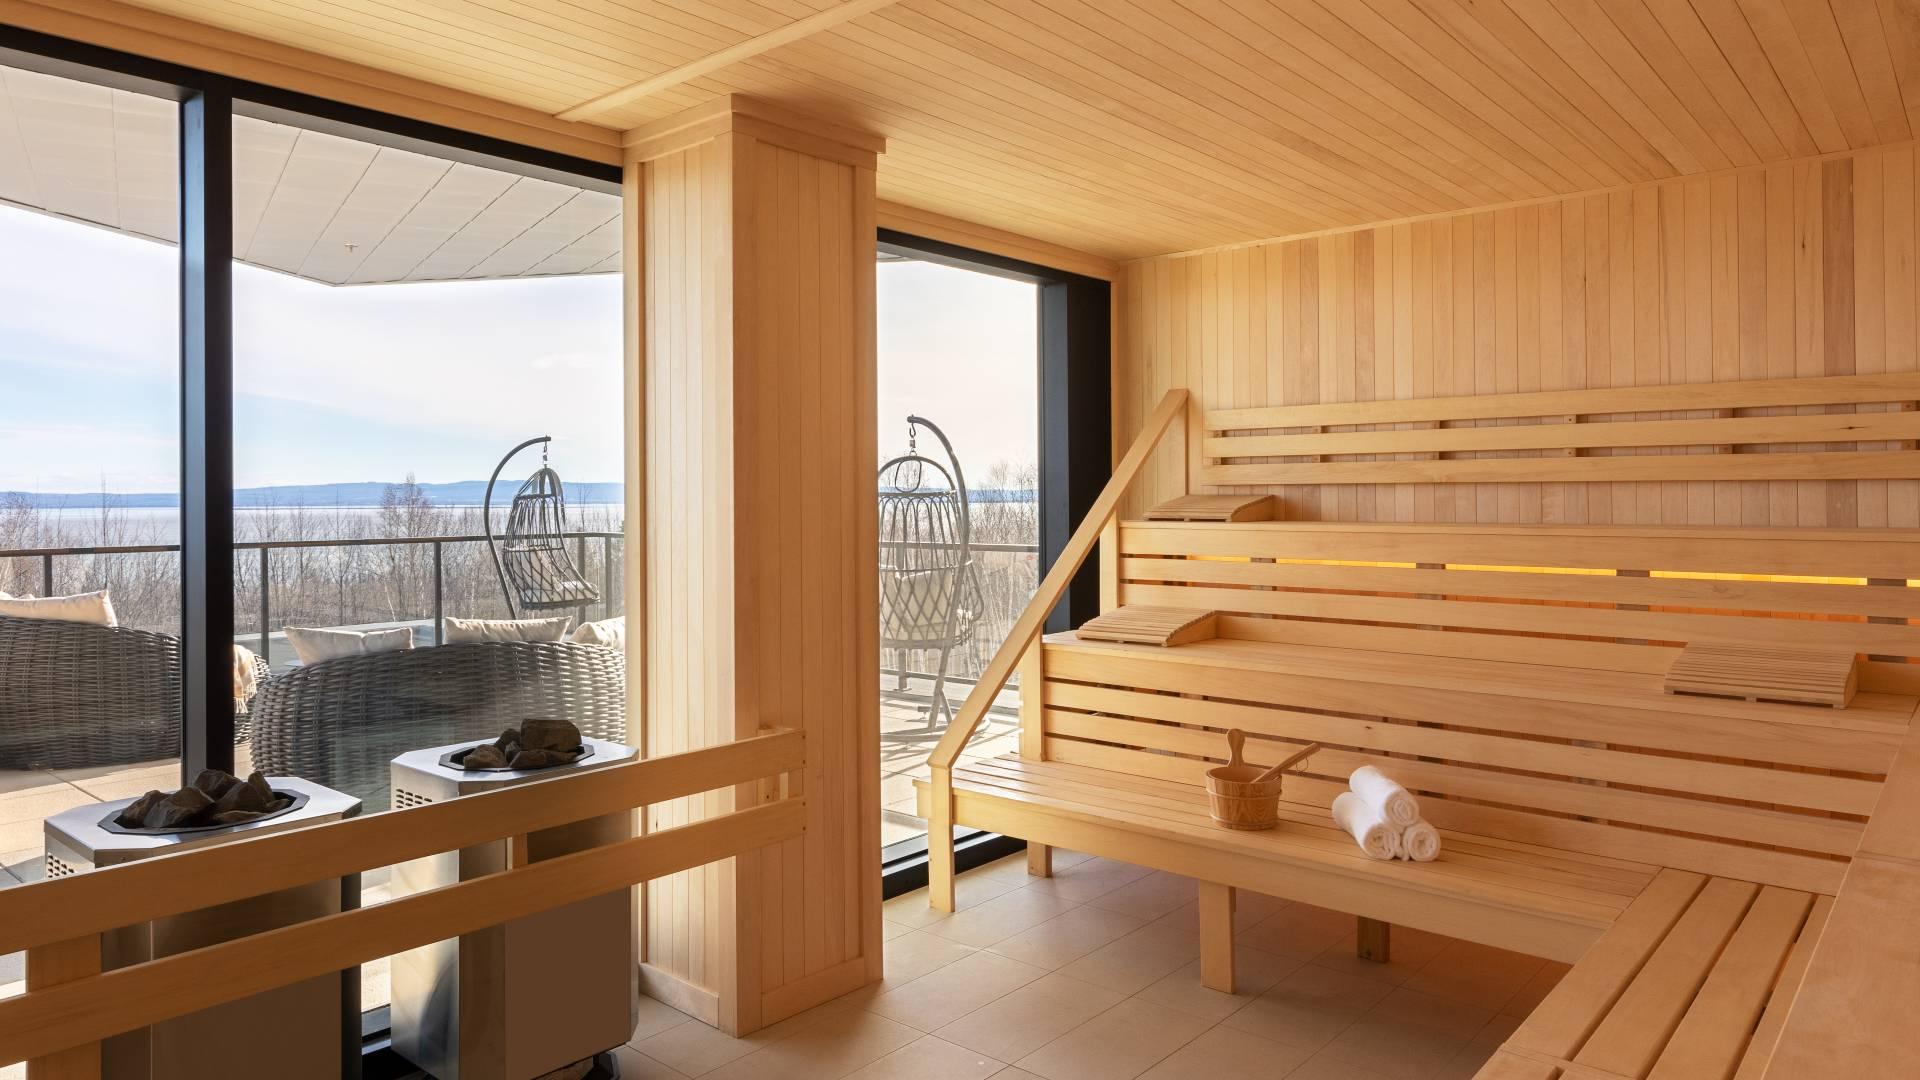 Club Med Charlevoix | Inside the sauna at Club Med Charlevoix